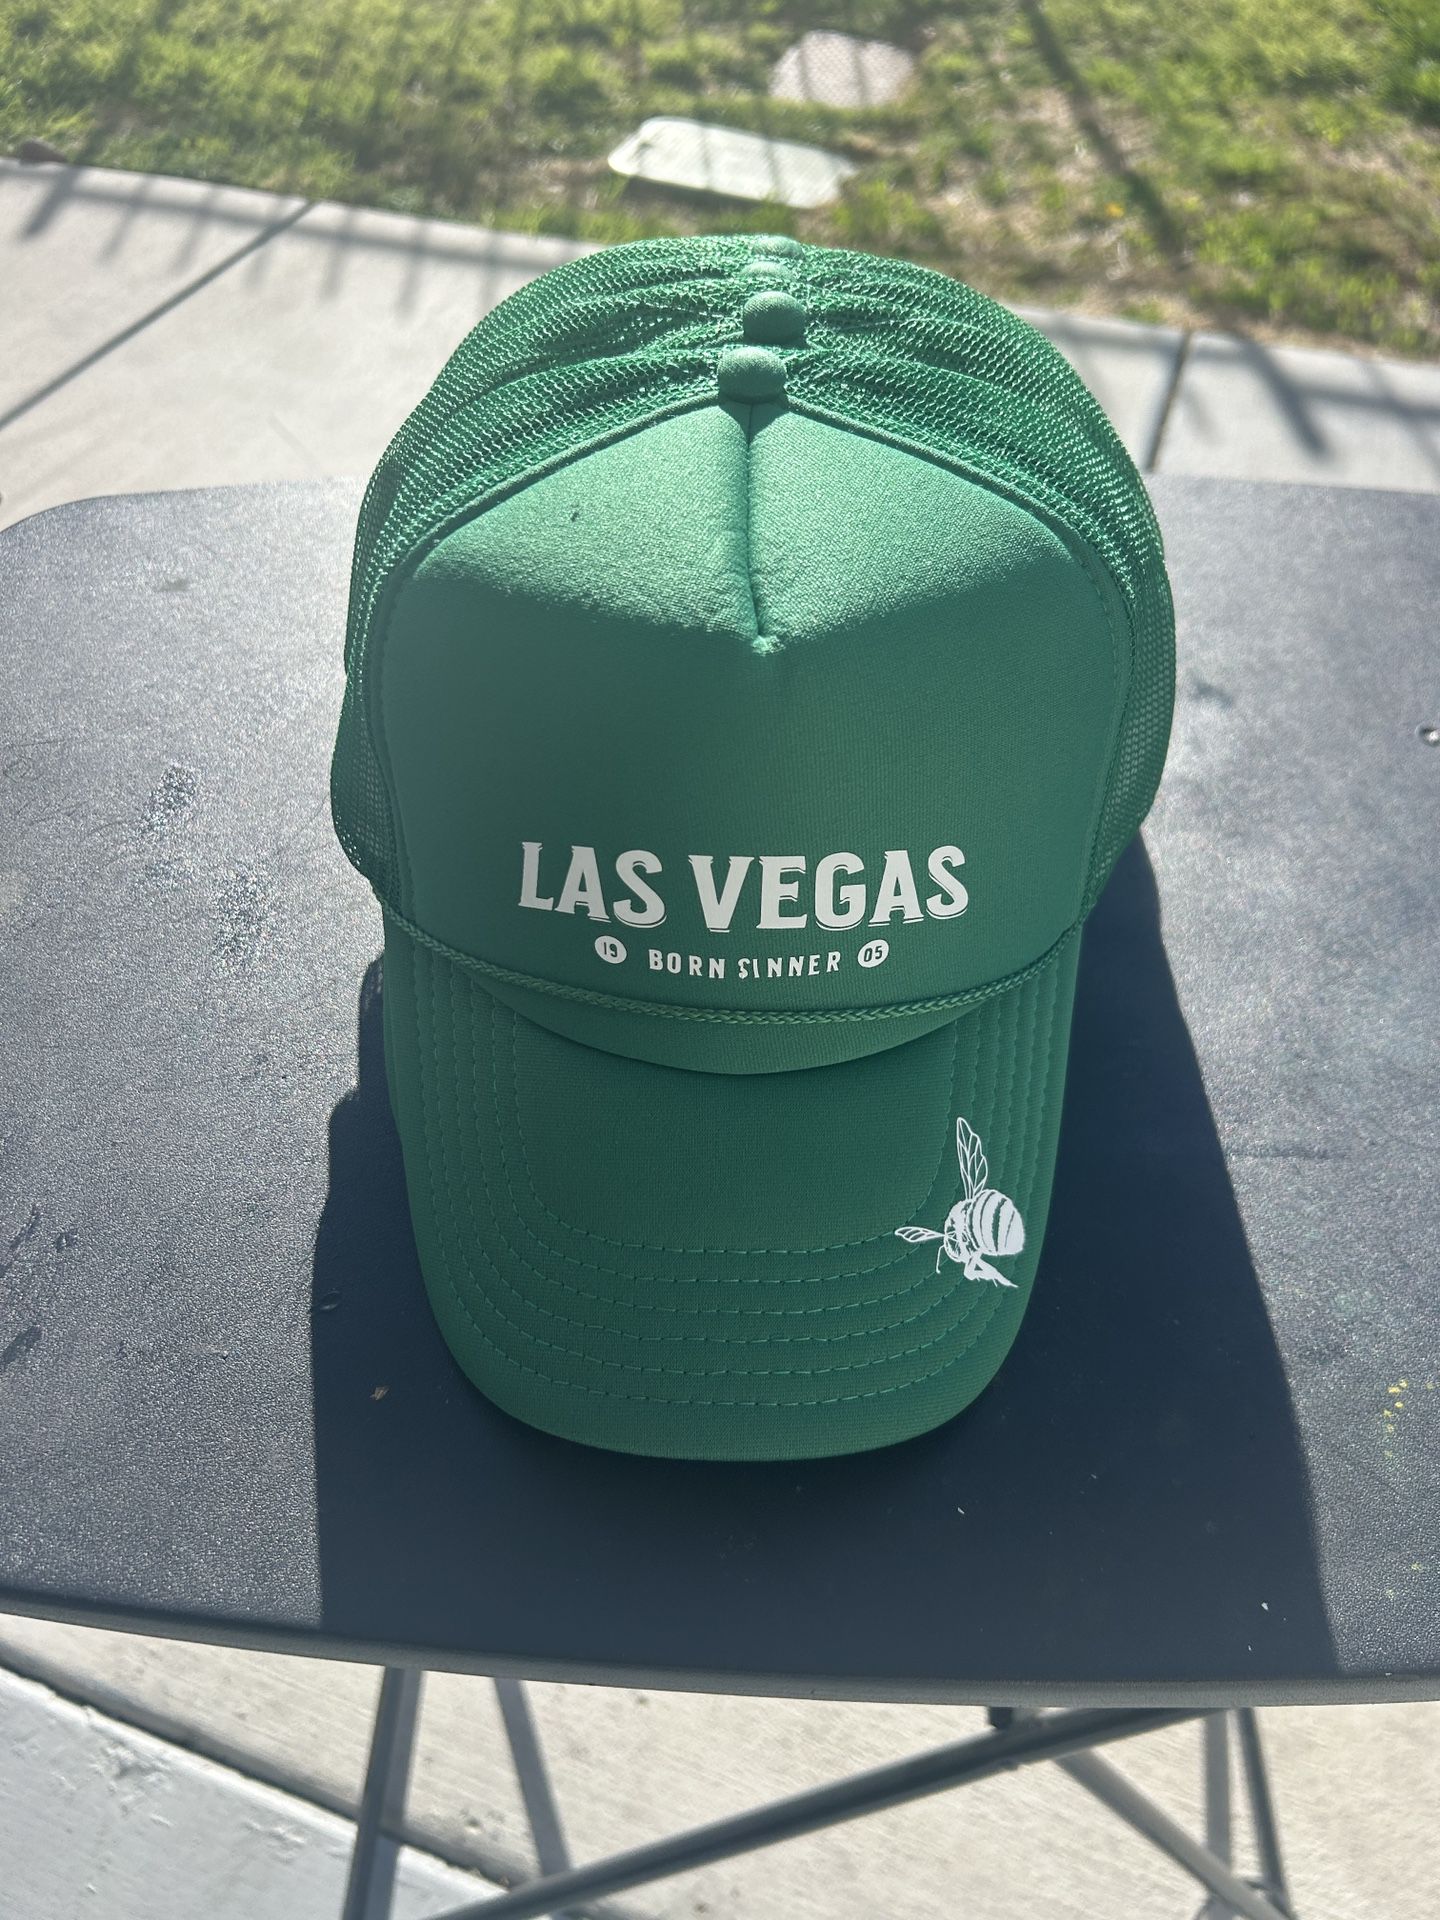 Las Vegas Hat (Brand New)